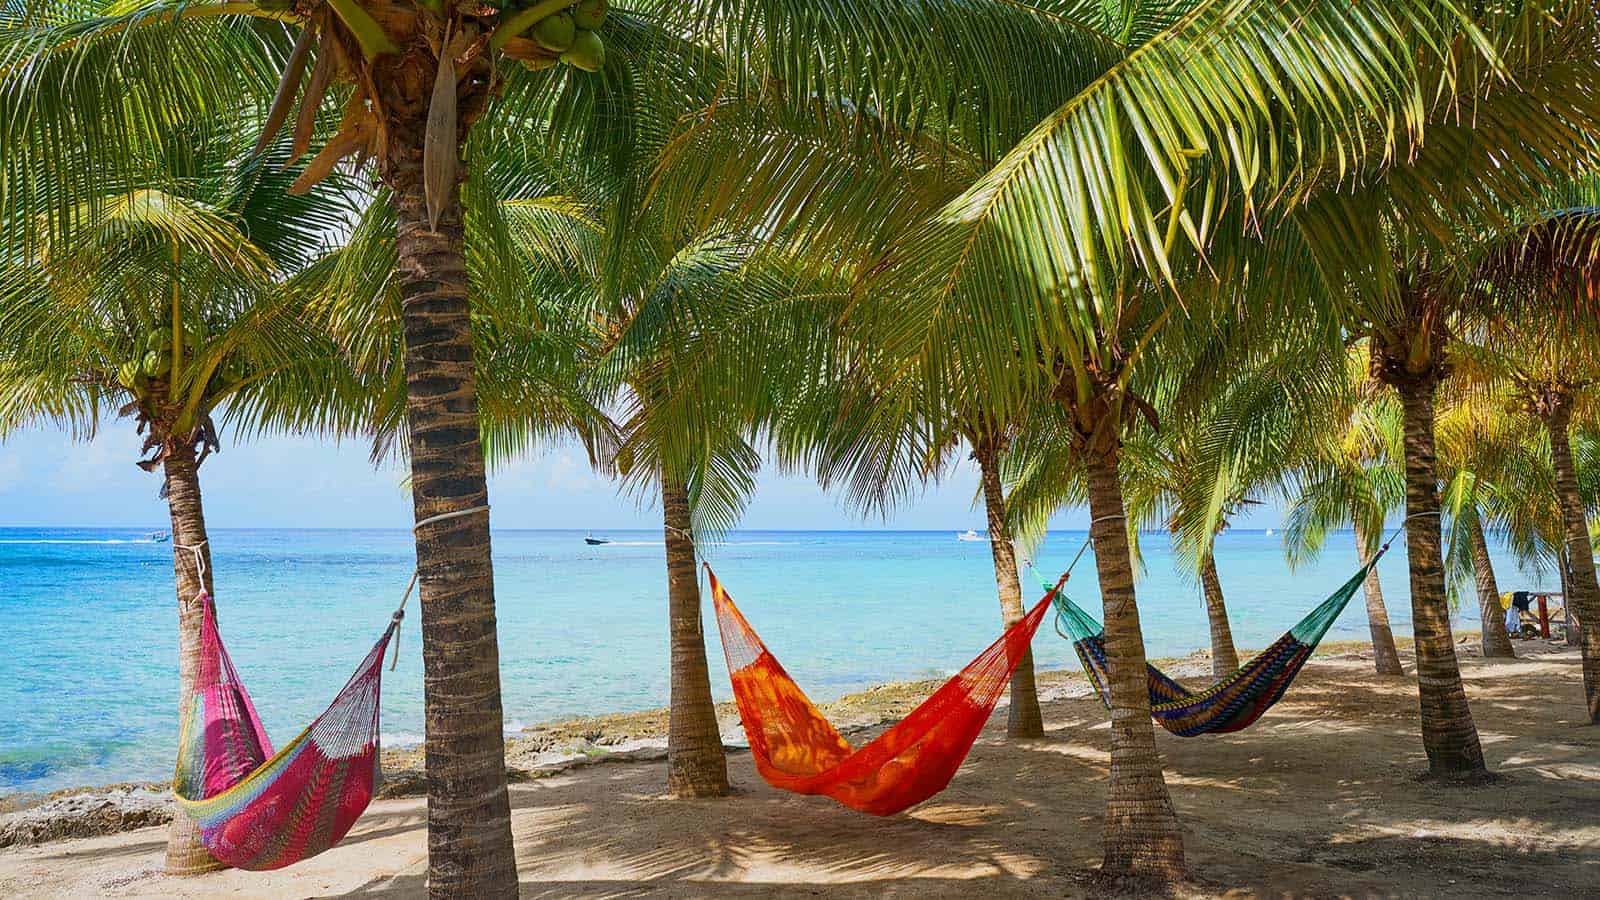 Cozumel Island, Mexico - The best beaches